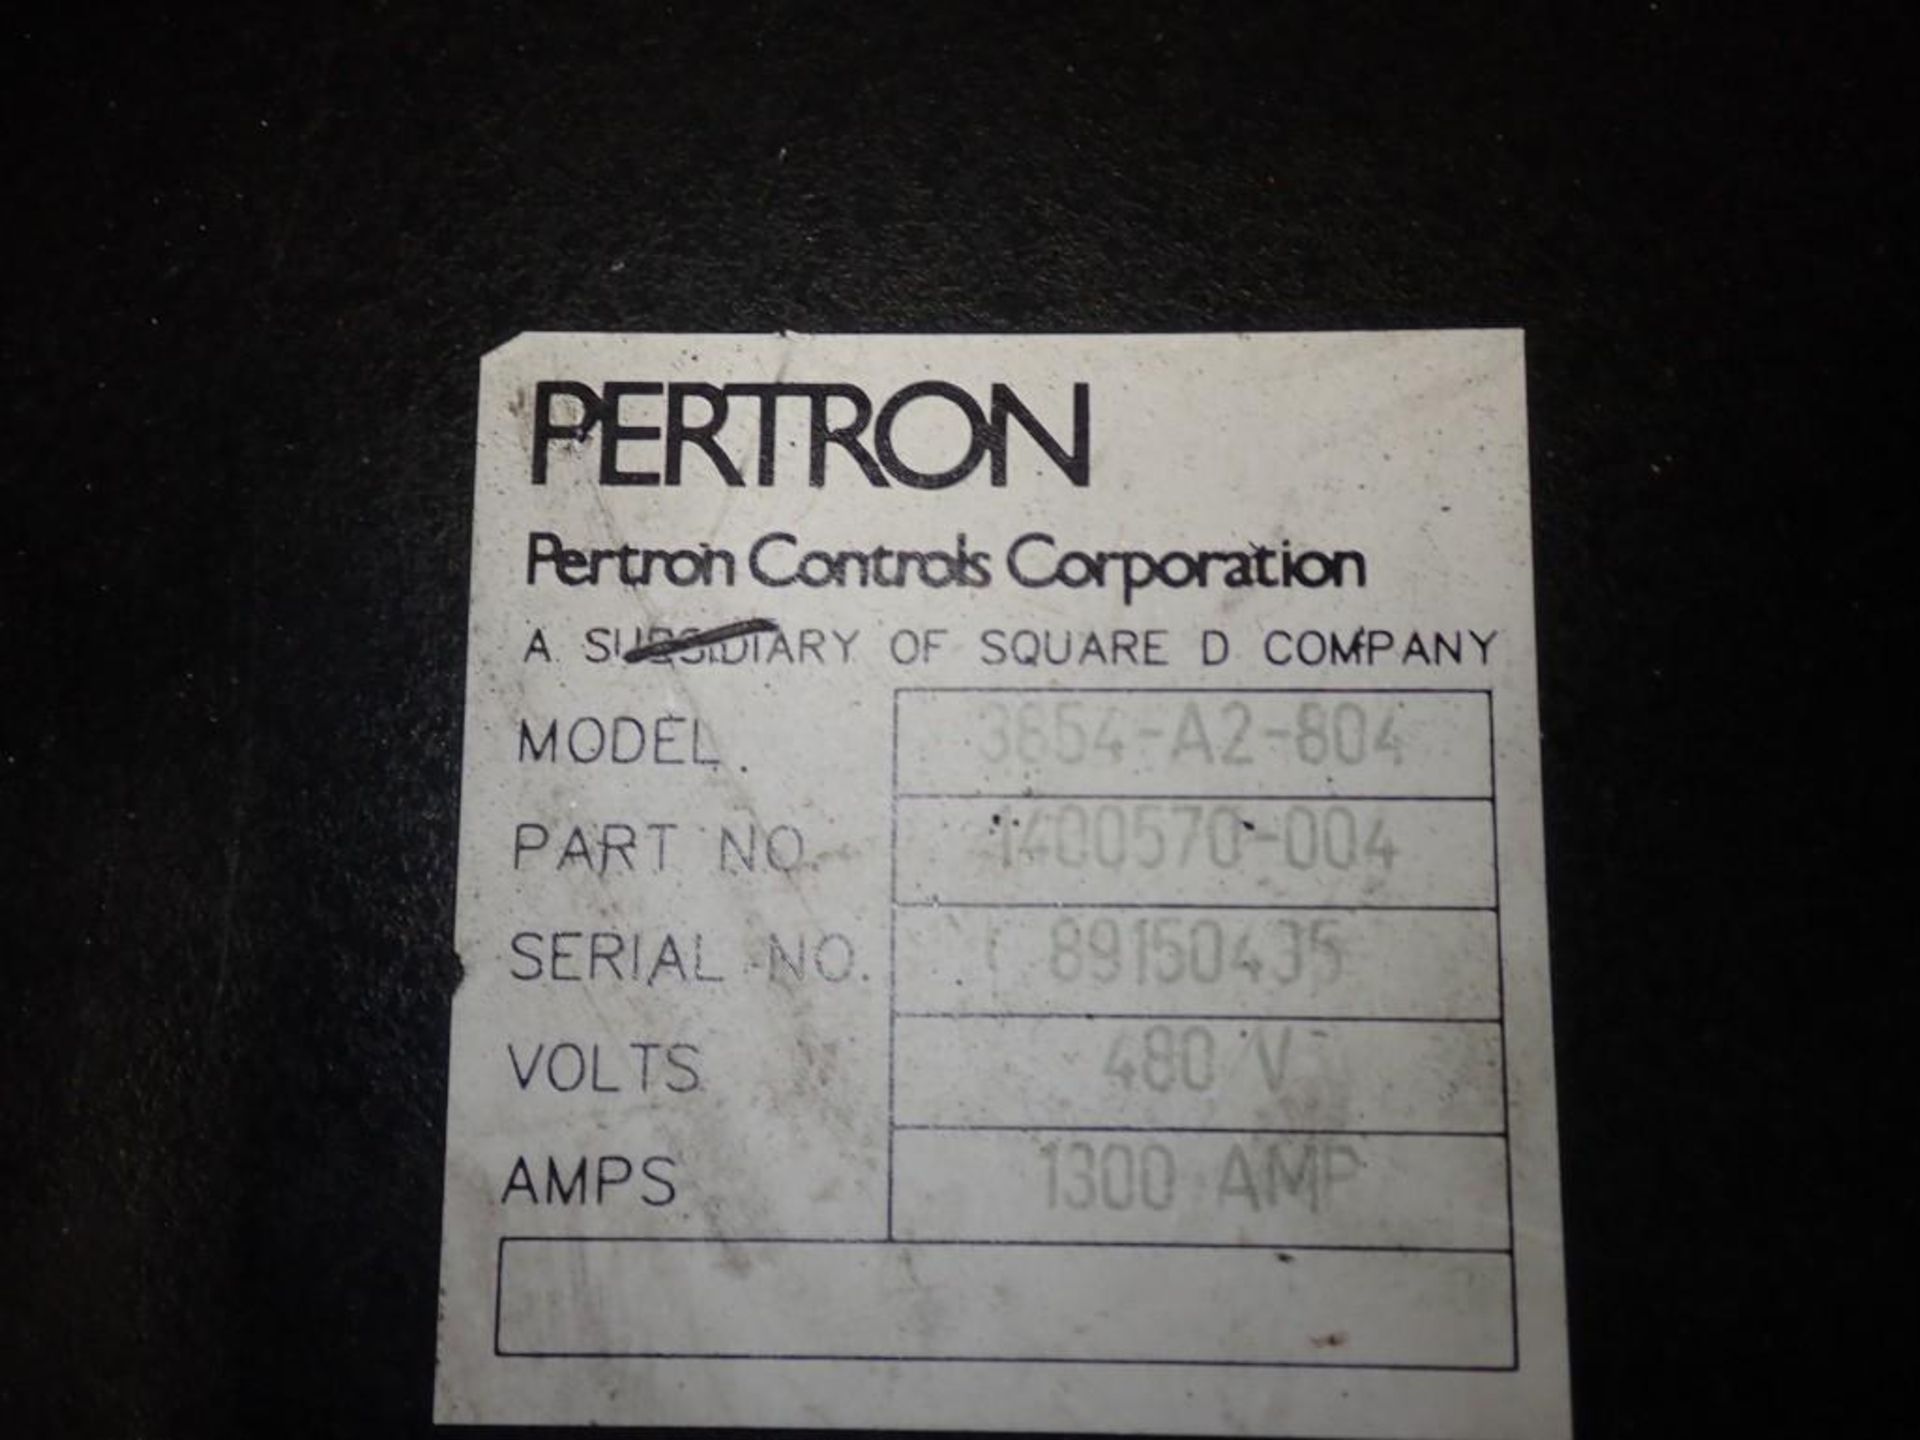 Pertron Controls Corporation #3854-A2-804 / #1400570-004 - Image 3 of 3